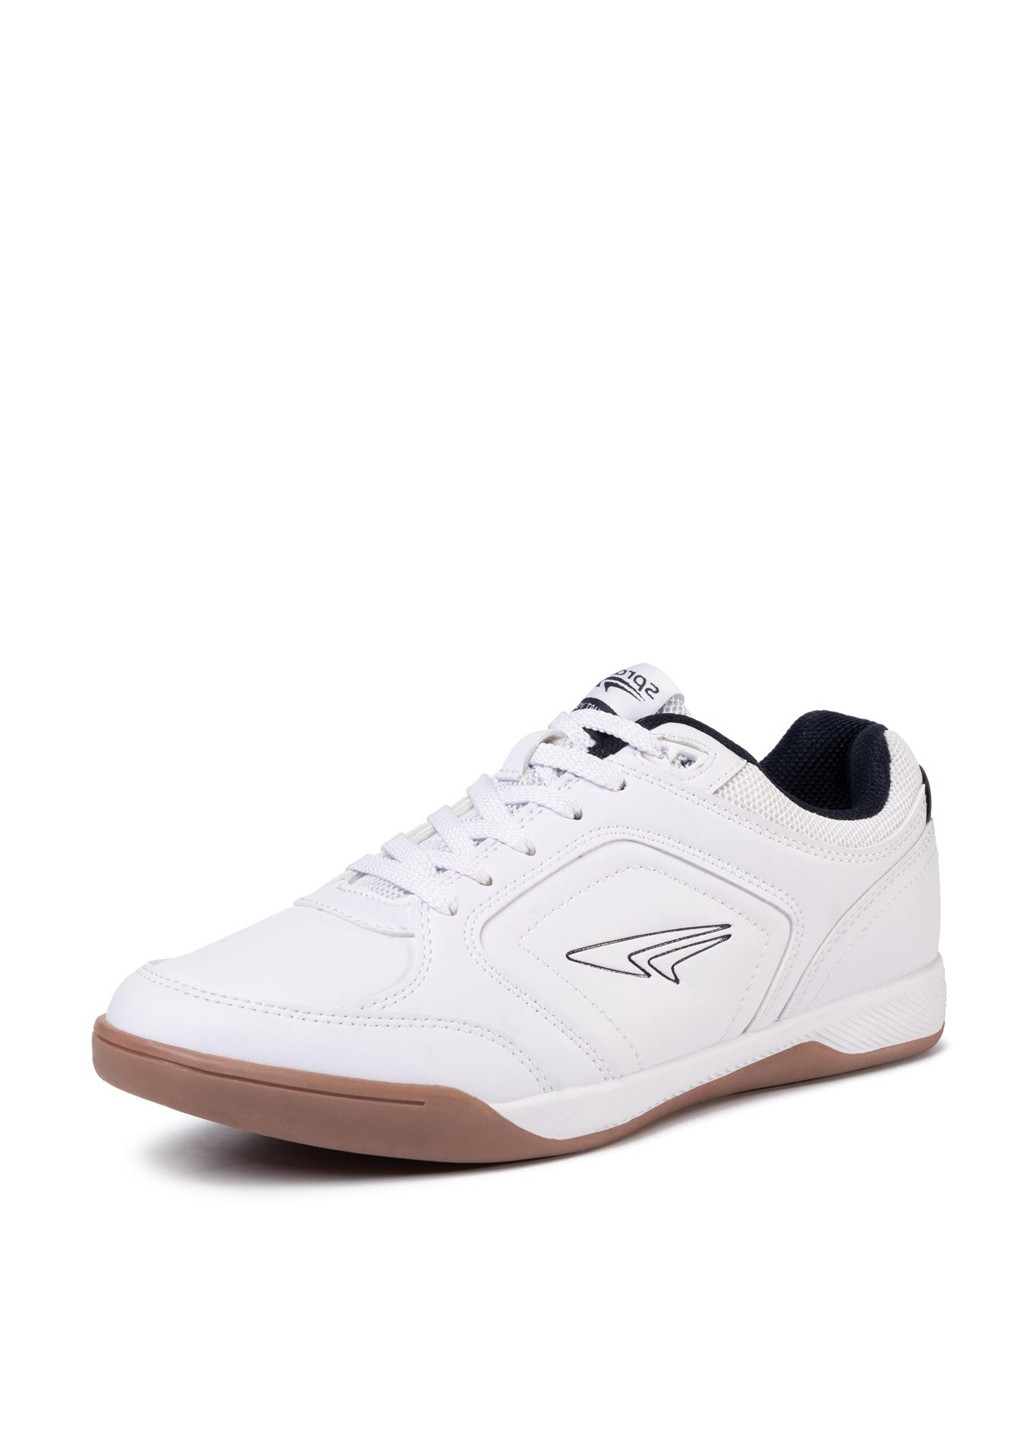 Белые демисезонные кросівки Sprandi MP07-6496-04